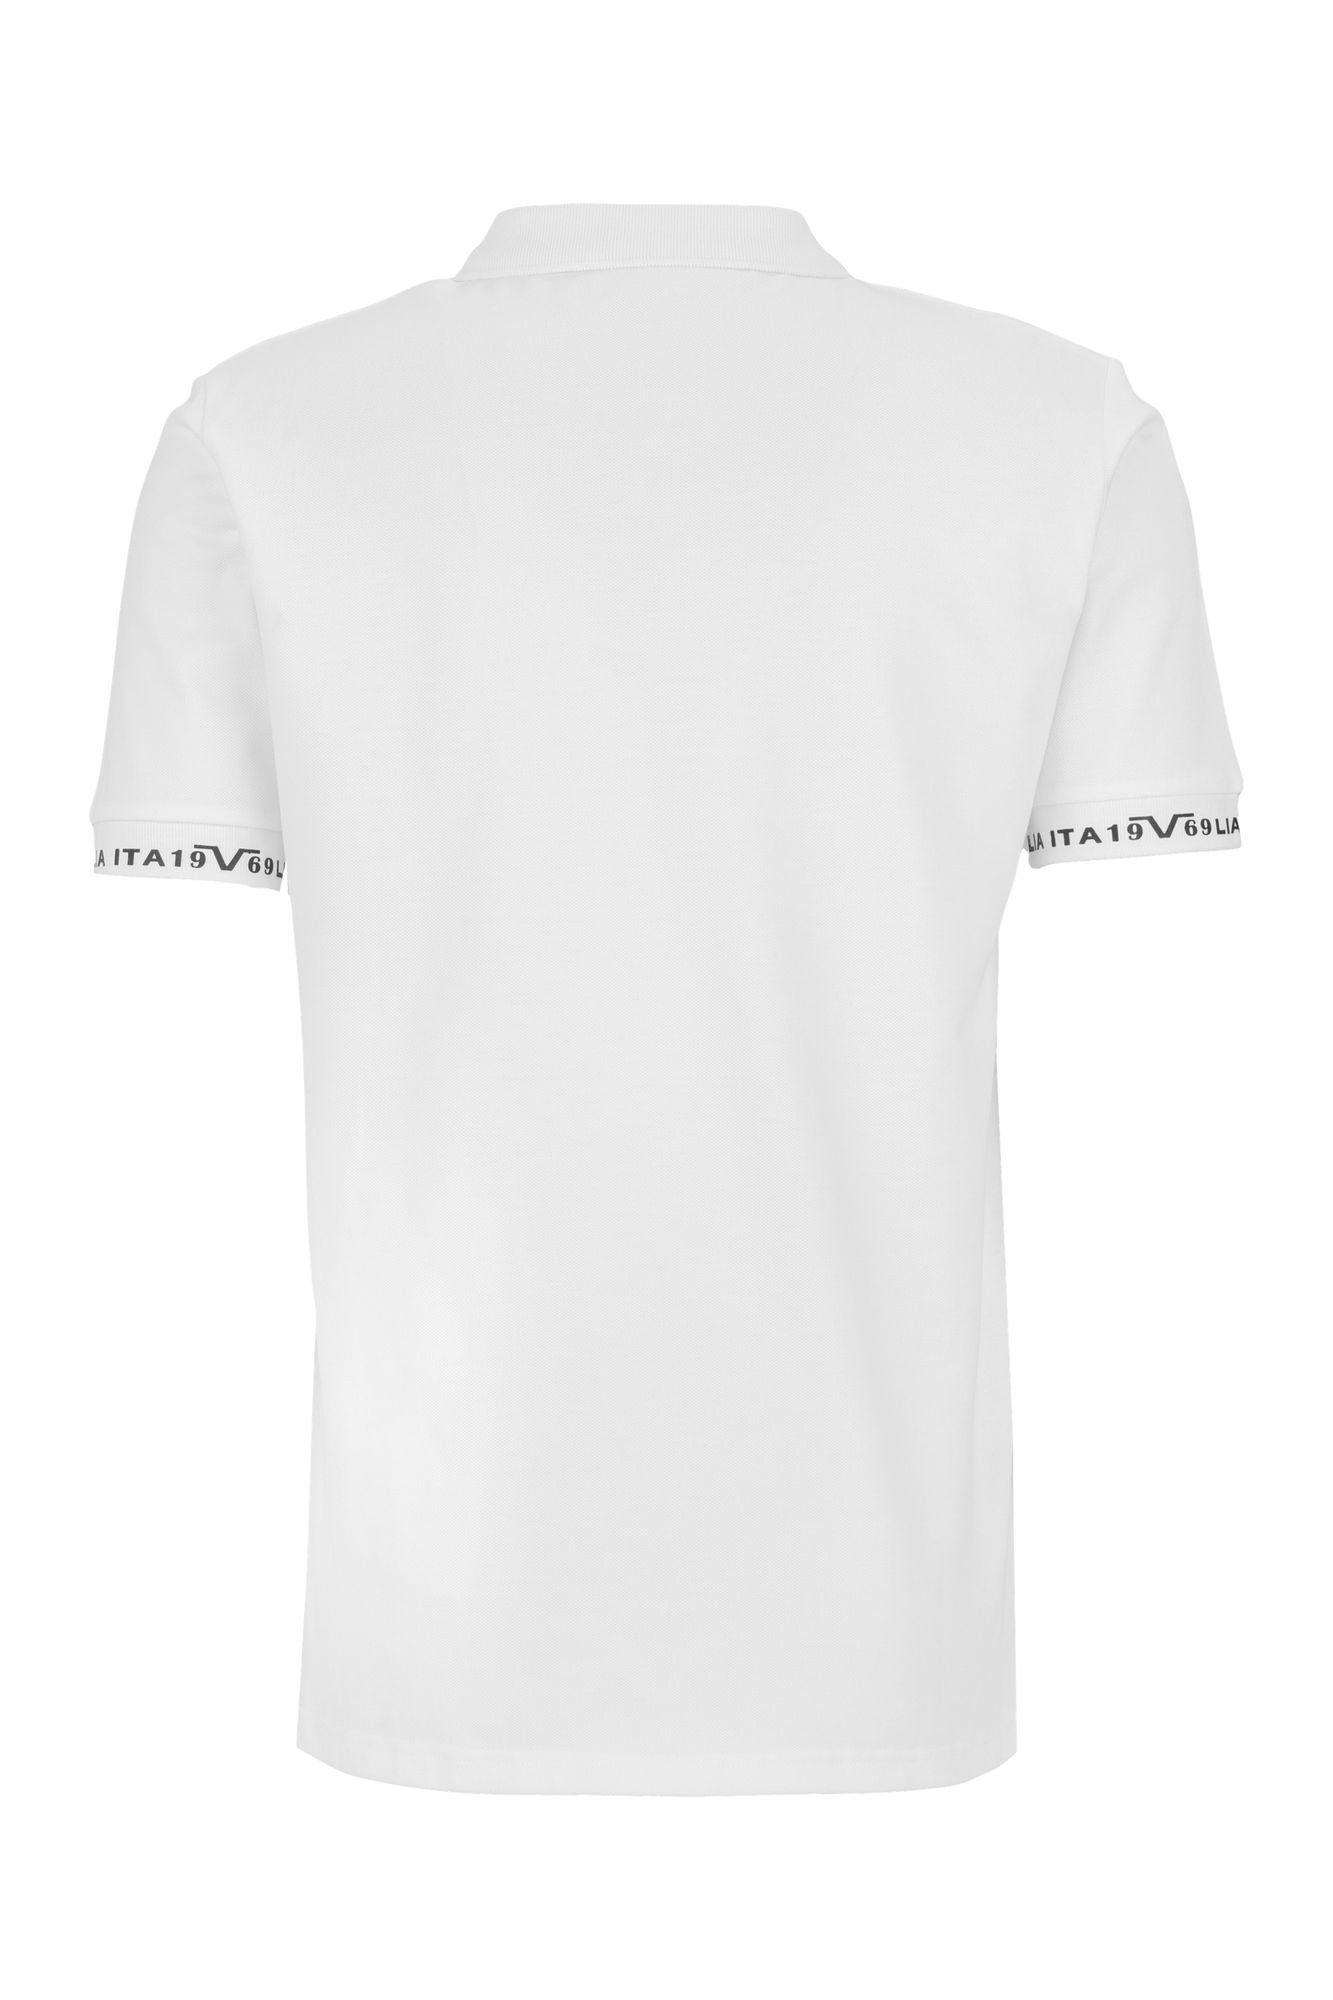 Versace Harry Italia 19V69 T-Shirt by WHITE